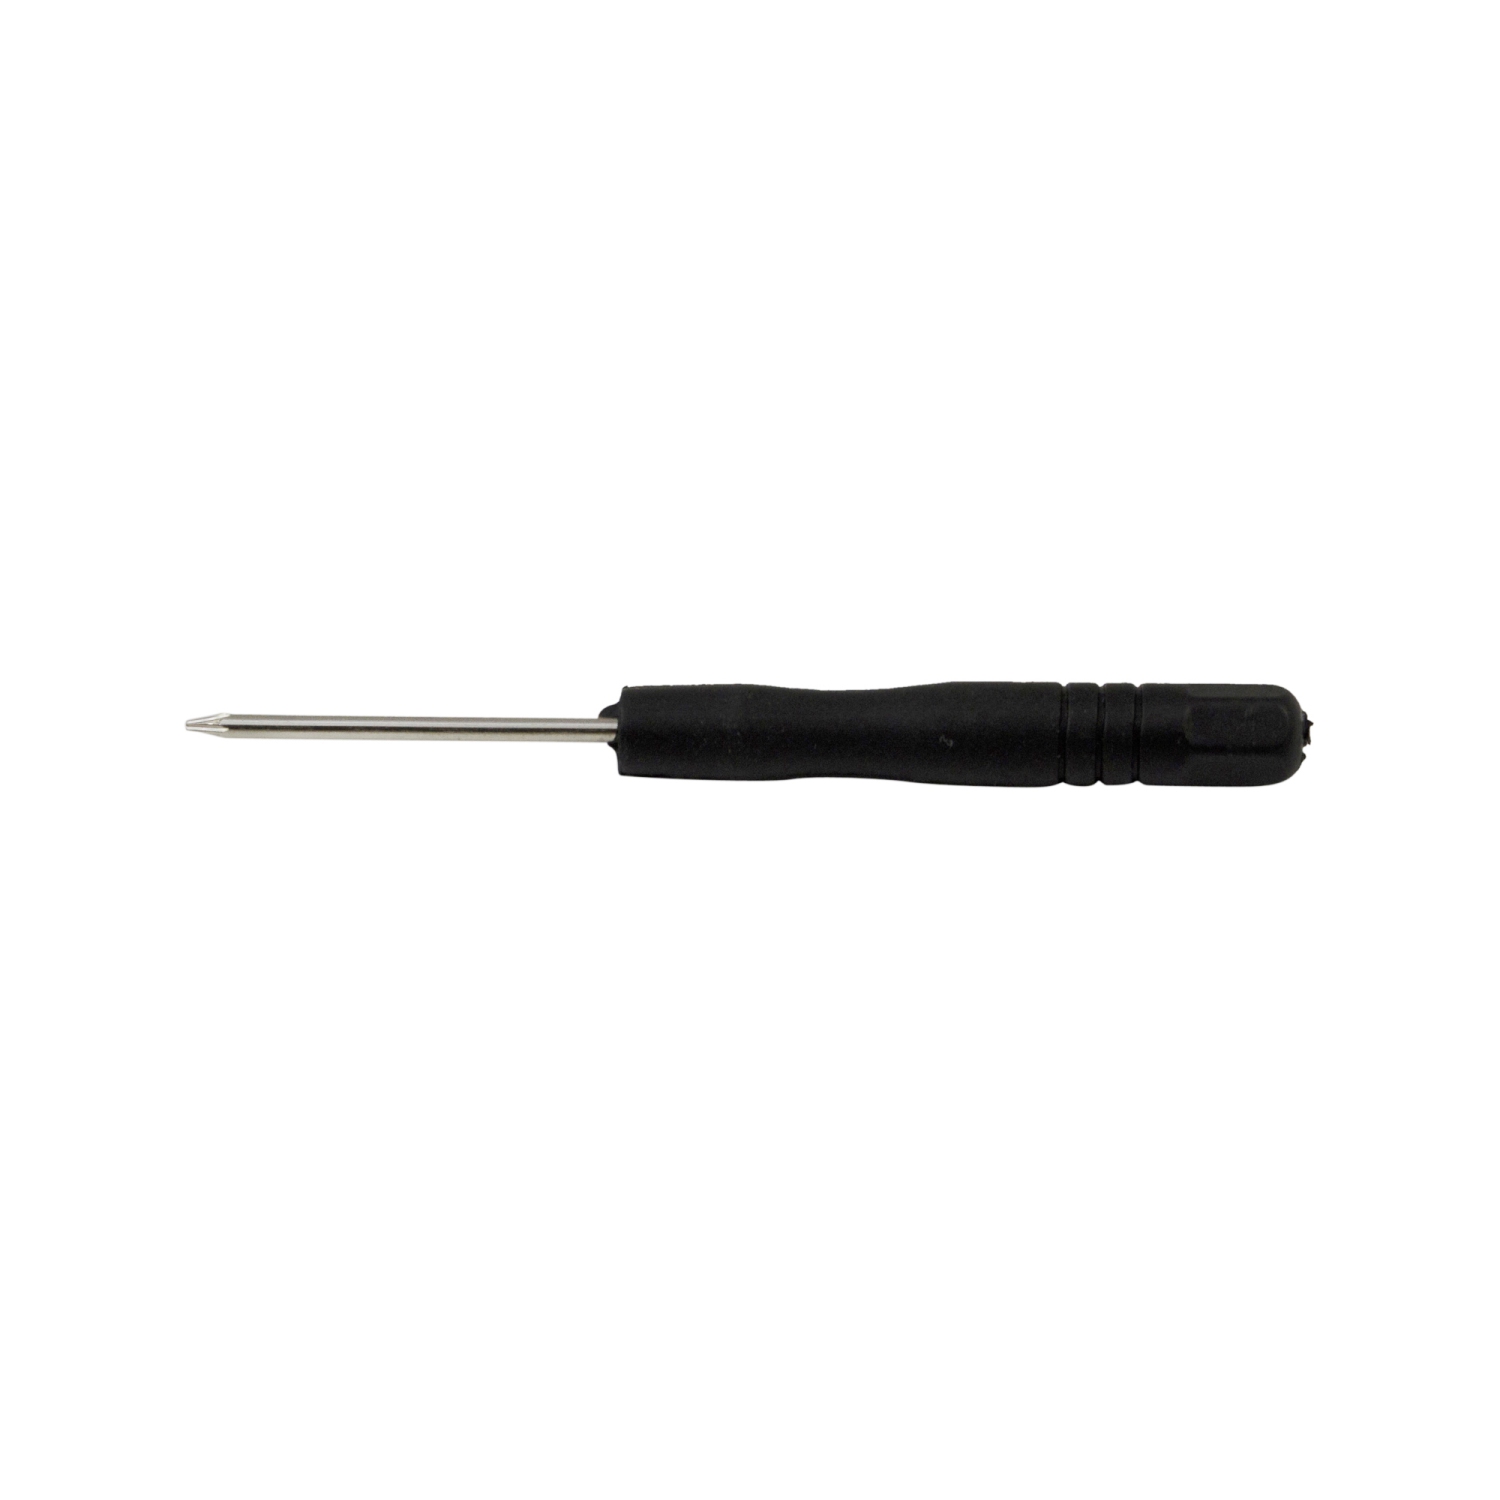 5 point pentalobe screwdriver in stores